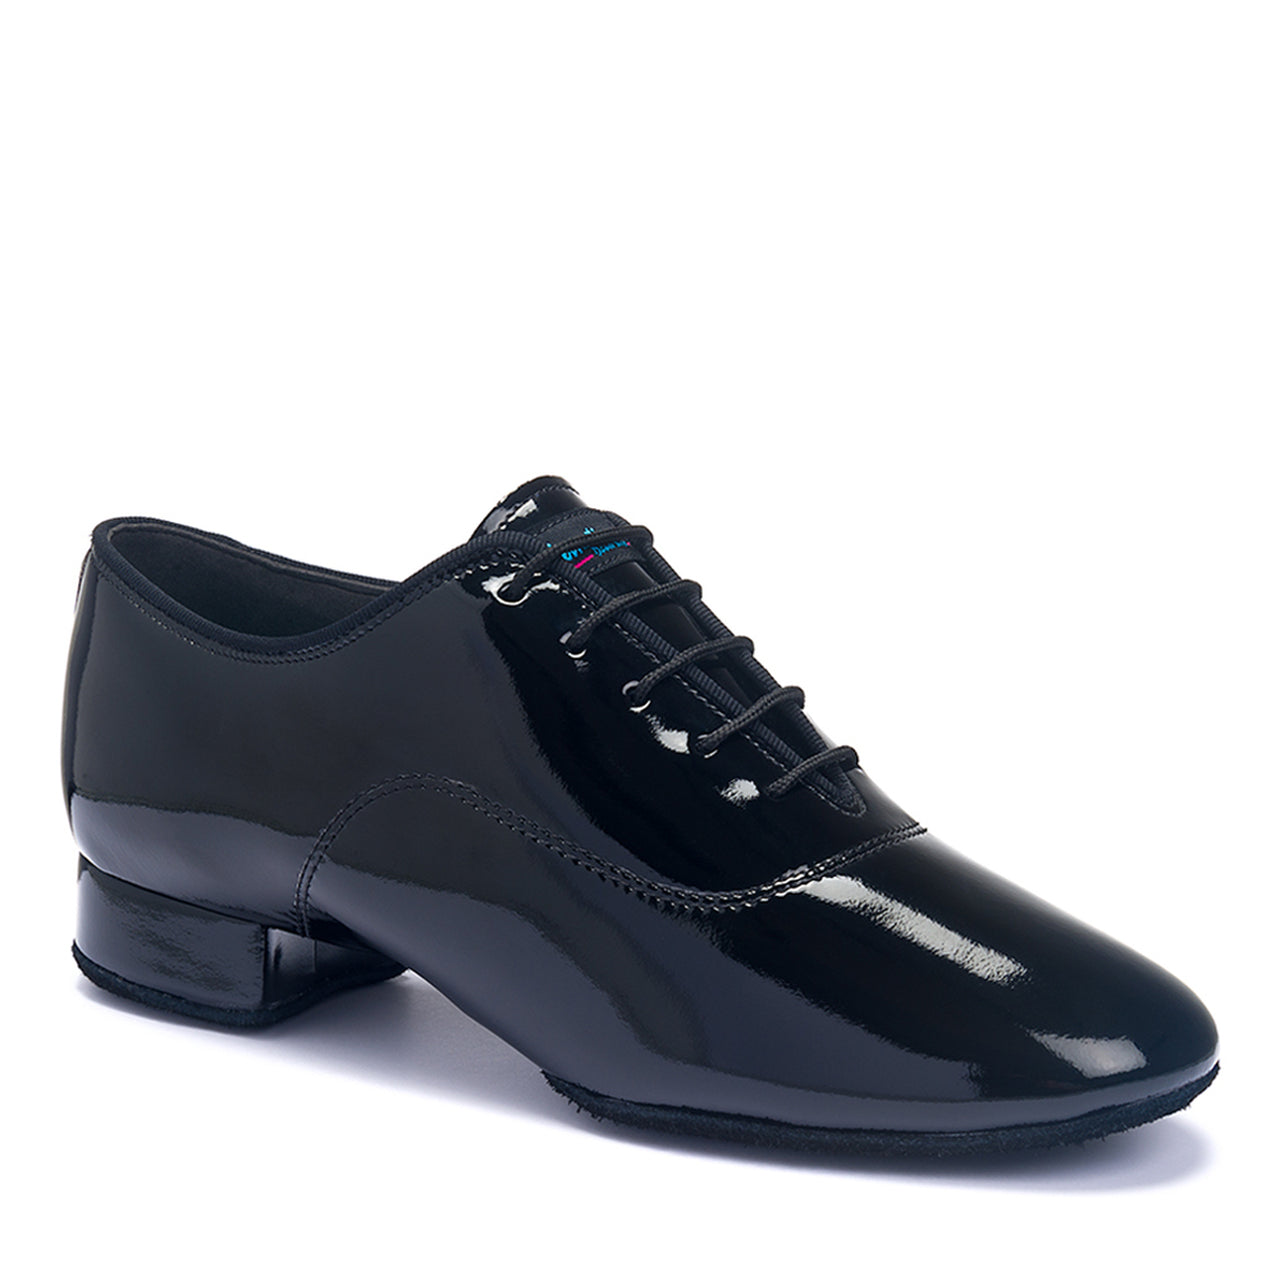 International Dance Shoes IDS Tango Men's Standard Ballroom Shoe Available in Black Calf or Black Patent